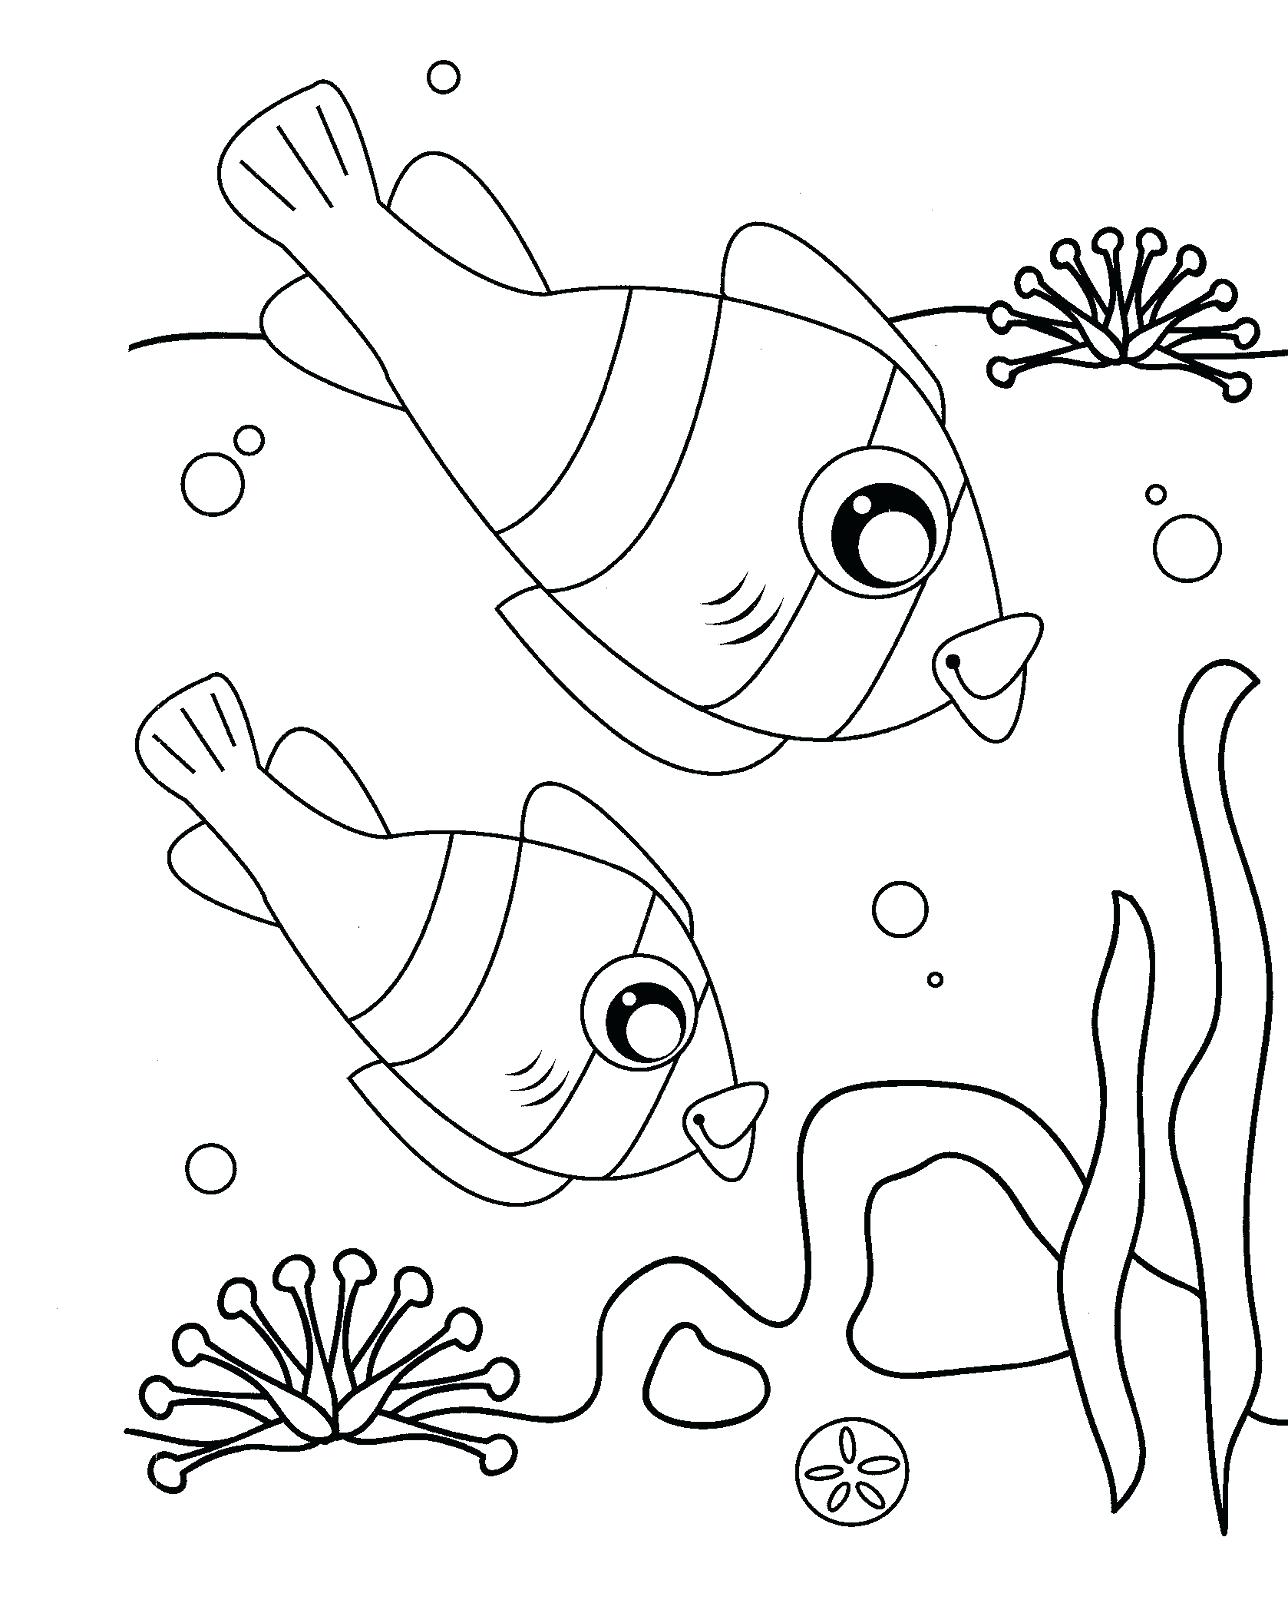 clownfish-drawing-at-getdrawings-free-download